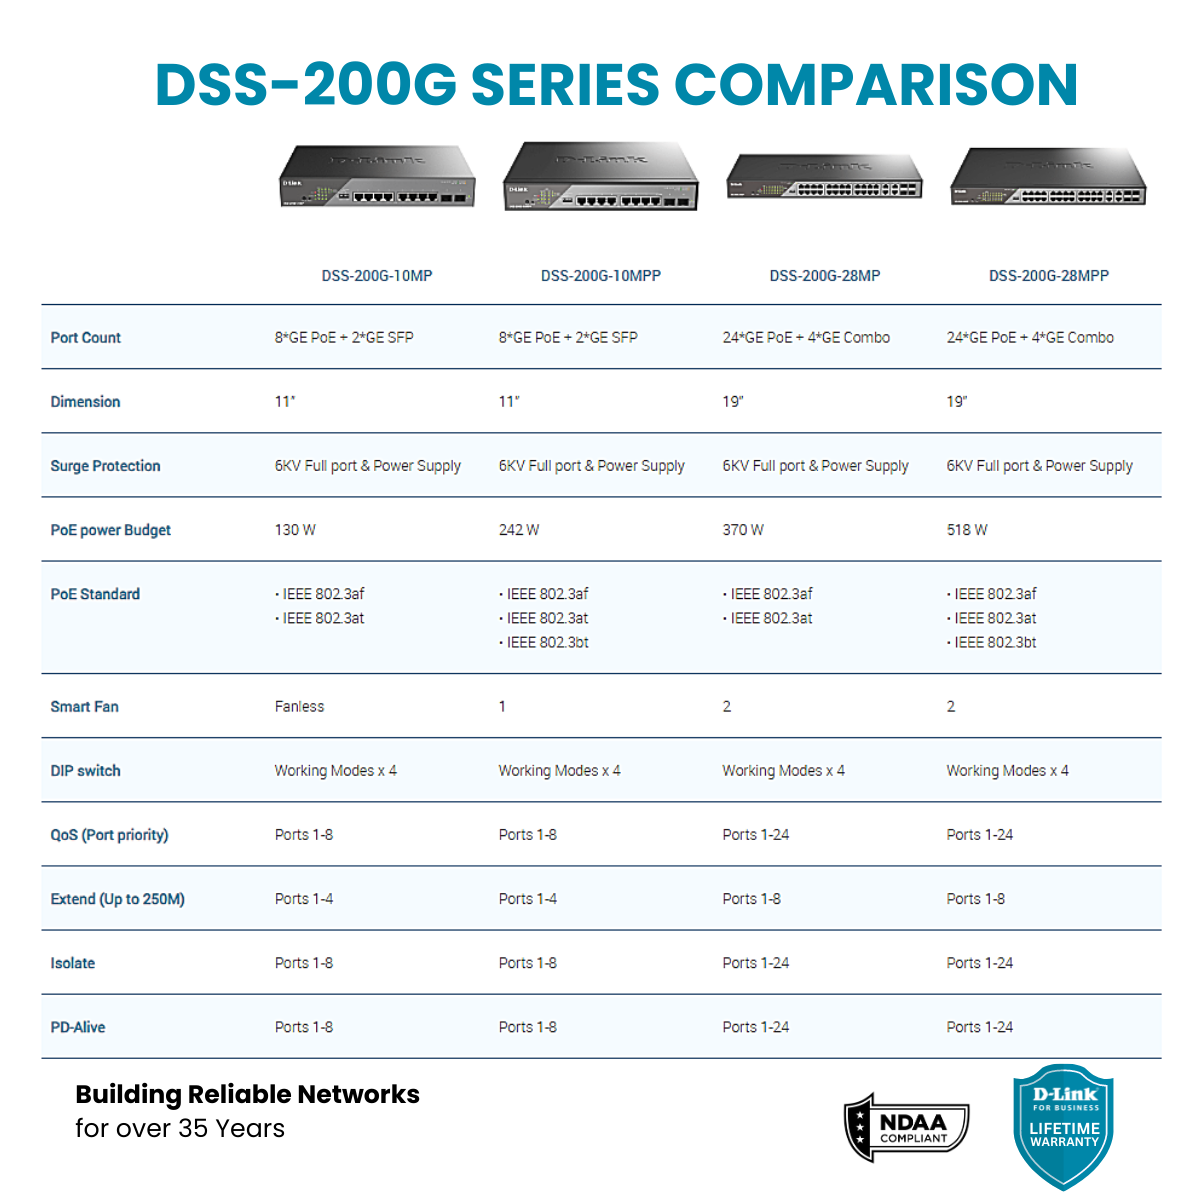 D-Link 8-Port Gigabit PoE++ Smart Managed Switch with 2 SFP Ports - DSS-200G-10MPP